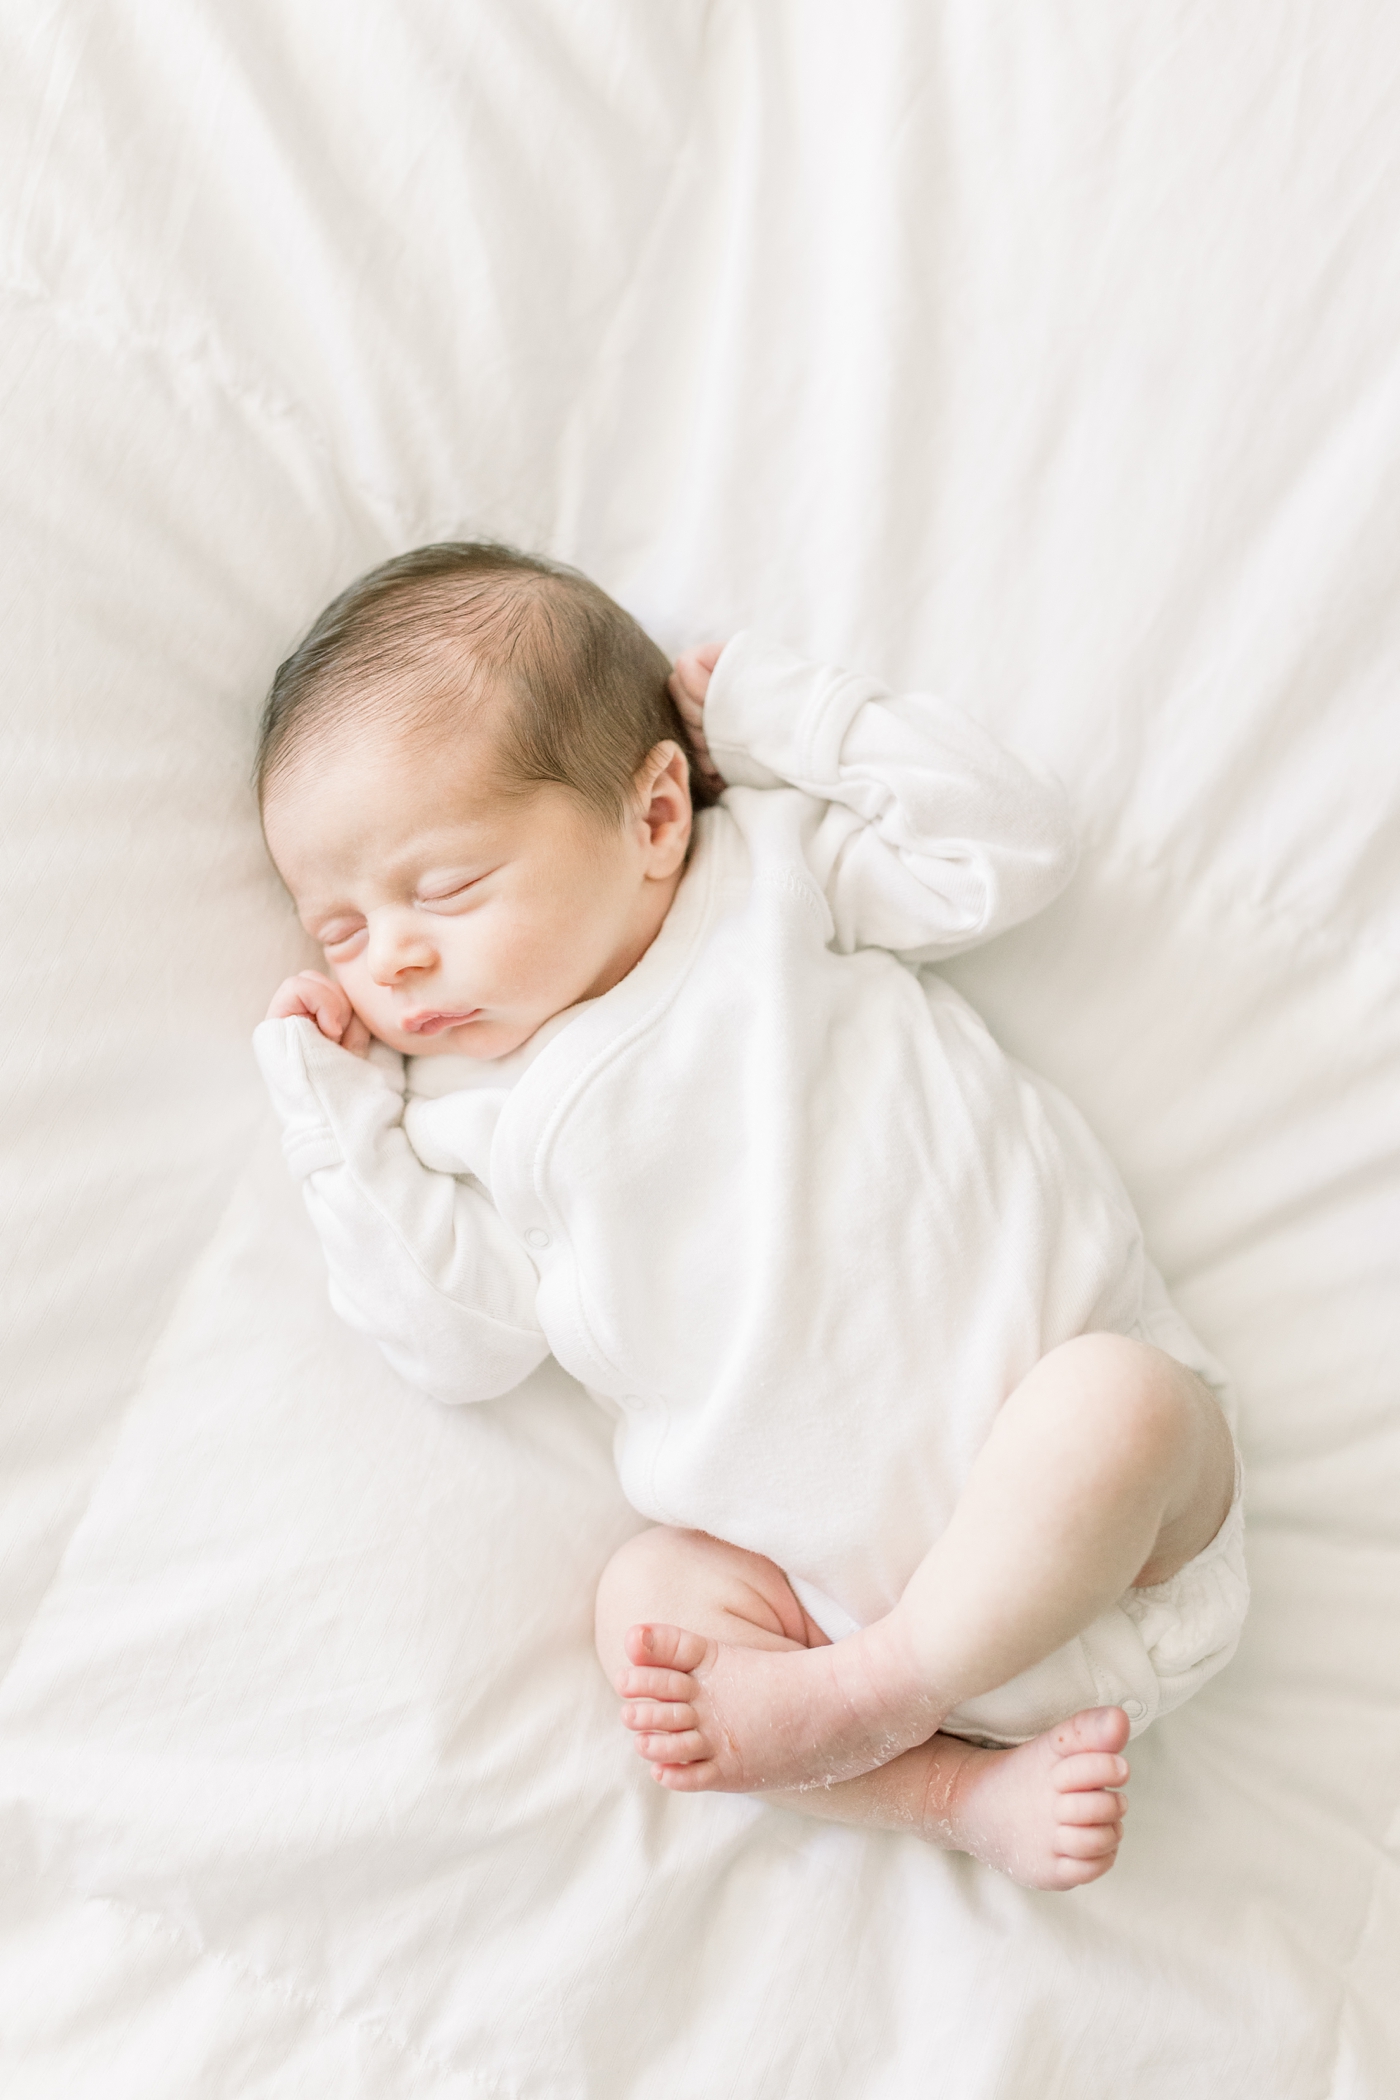 Newborn baby sleeping in a white onesie | Photo by Caitlyn Motycka Photography.